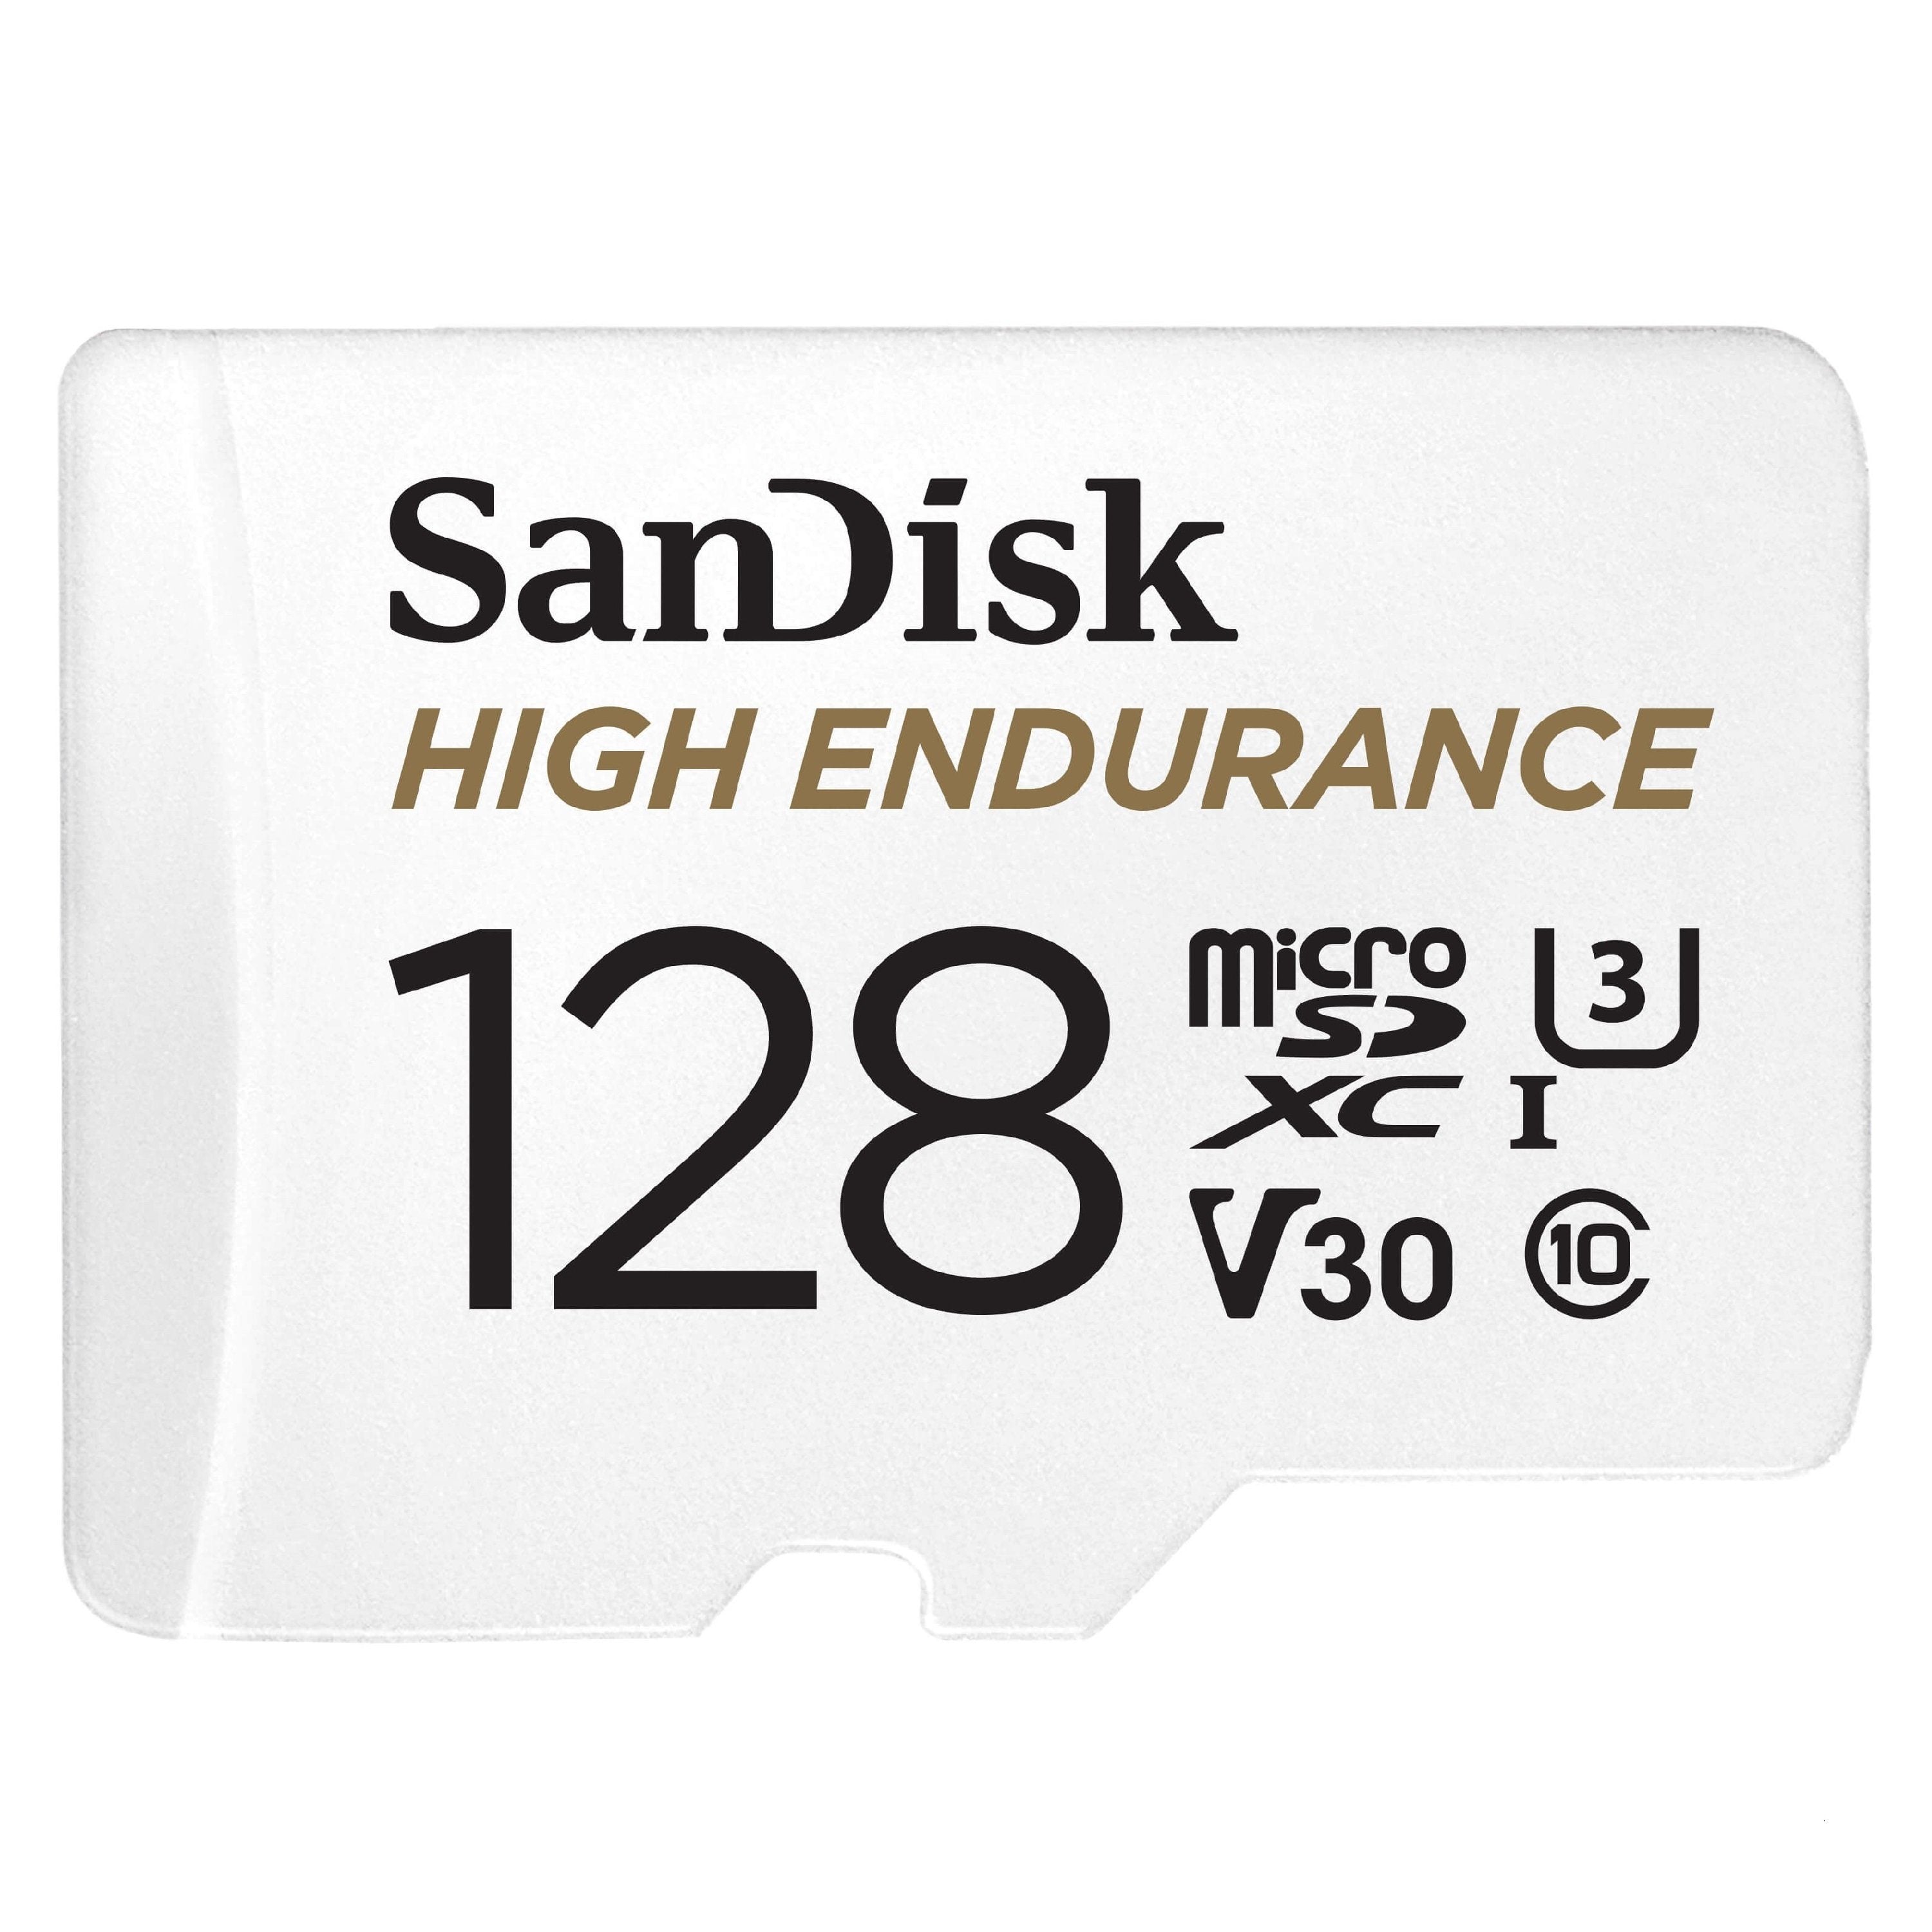 Sandisk High Endurance Micro SD-kaart 128GB VIOFO Benelux